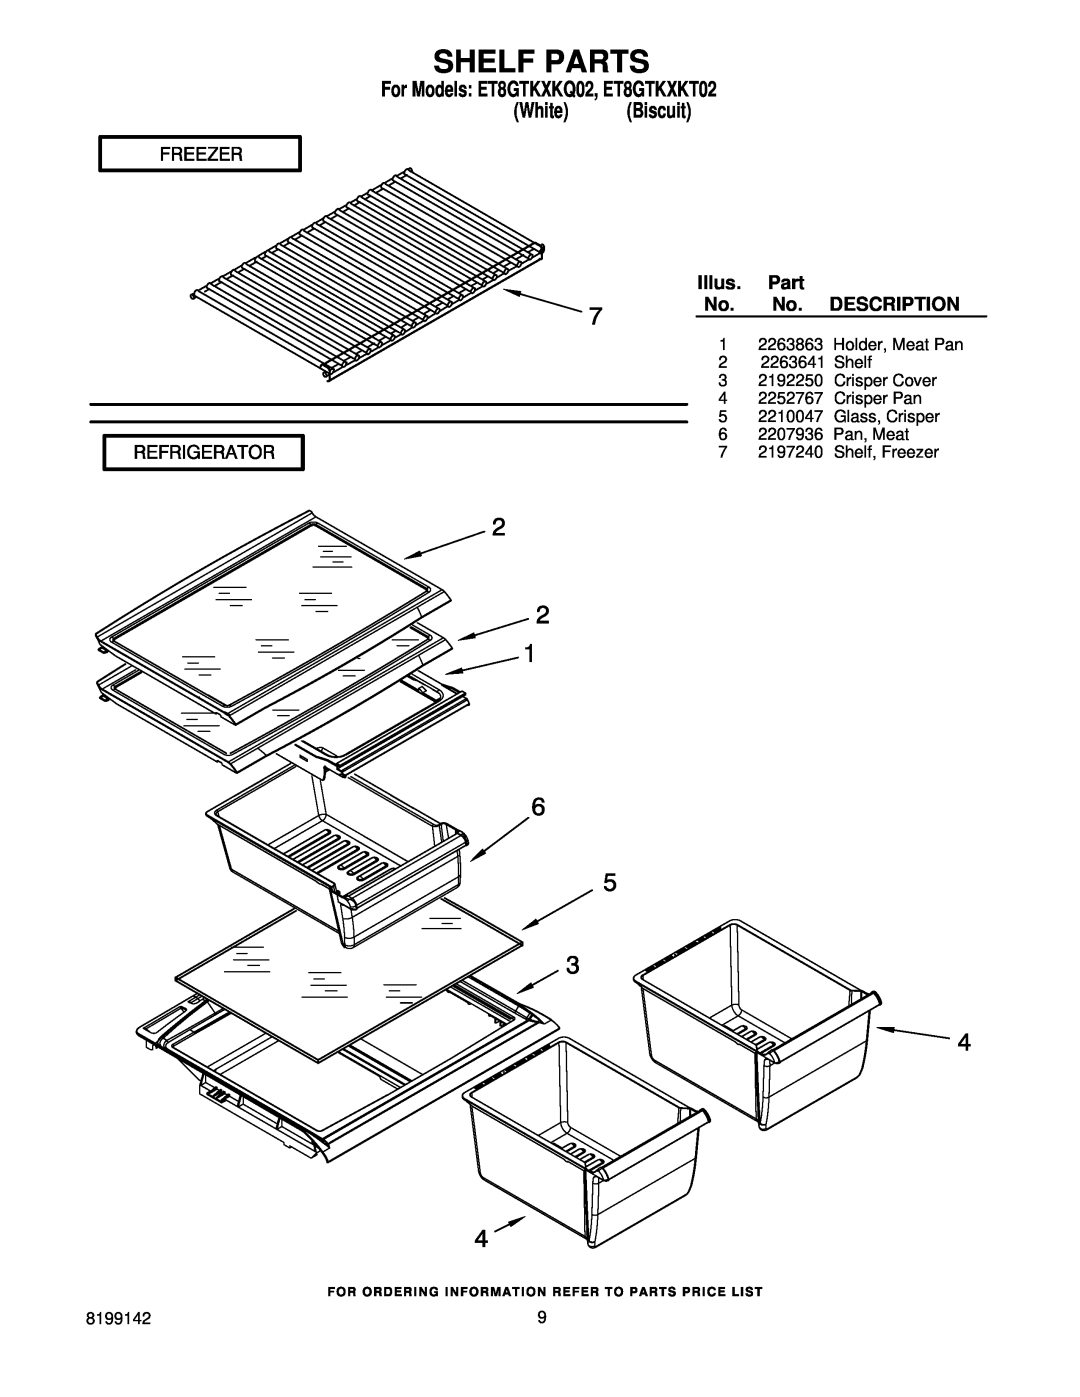 Whirlpool manual Shelf Parts, Illus, Description, For Models ET8GTKXKQ02, ET8GTKXKT02, White Biscuit 